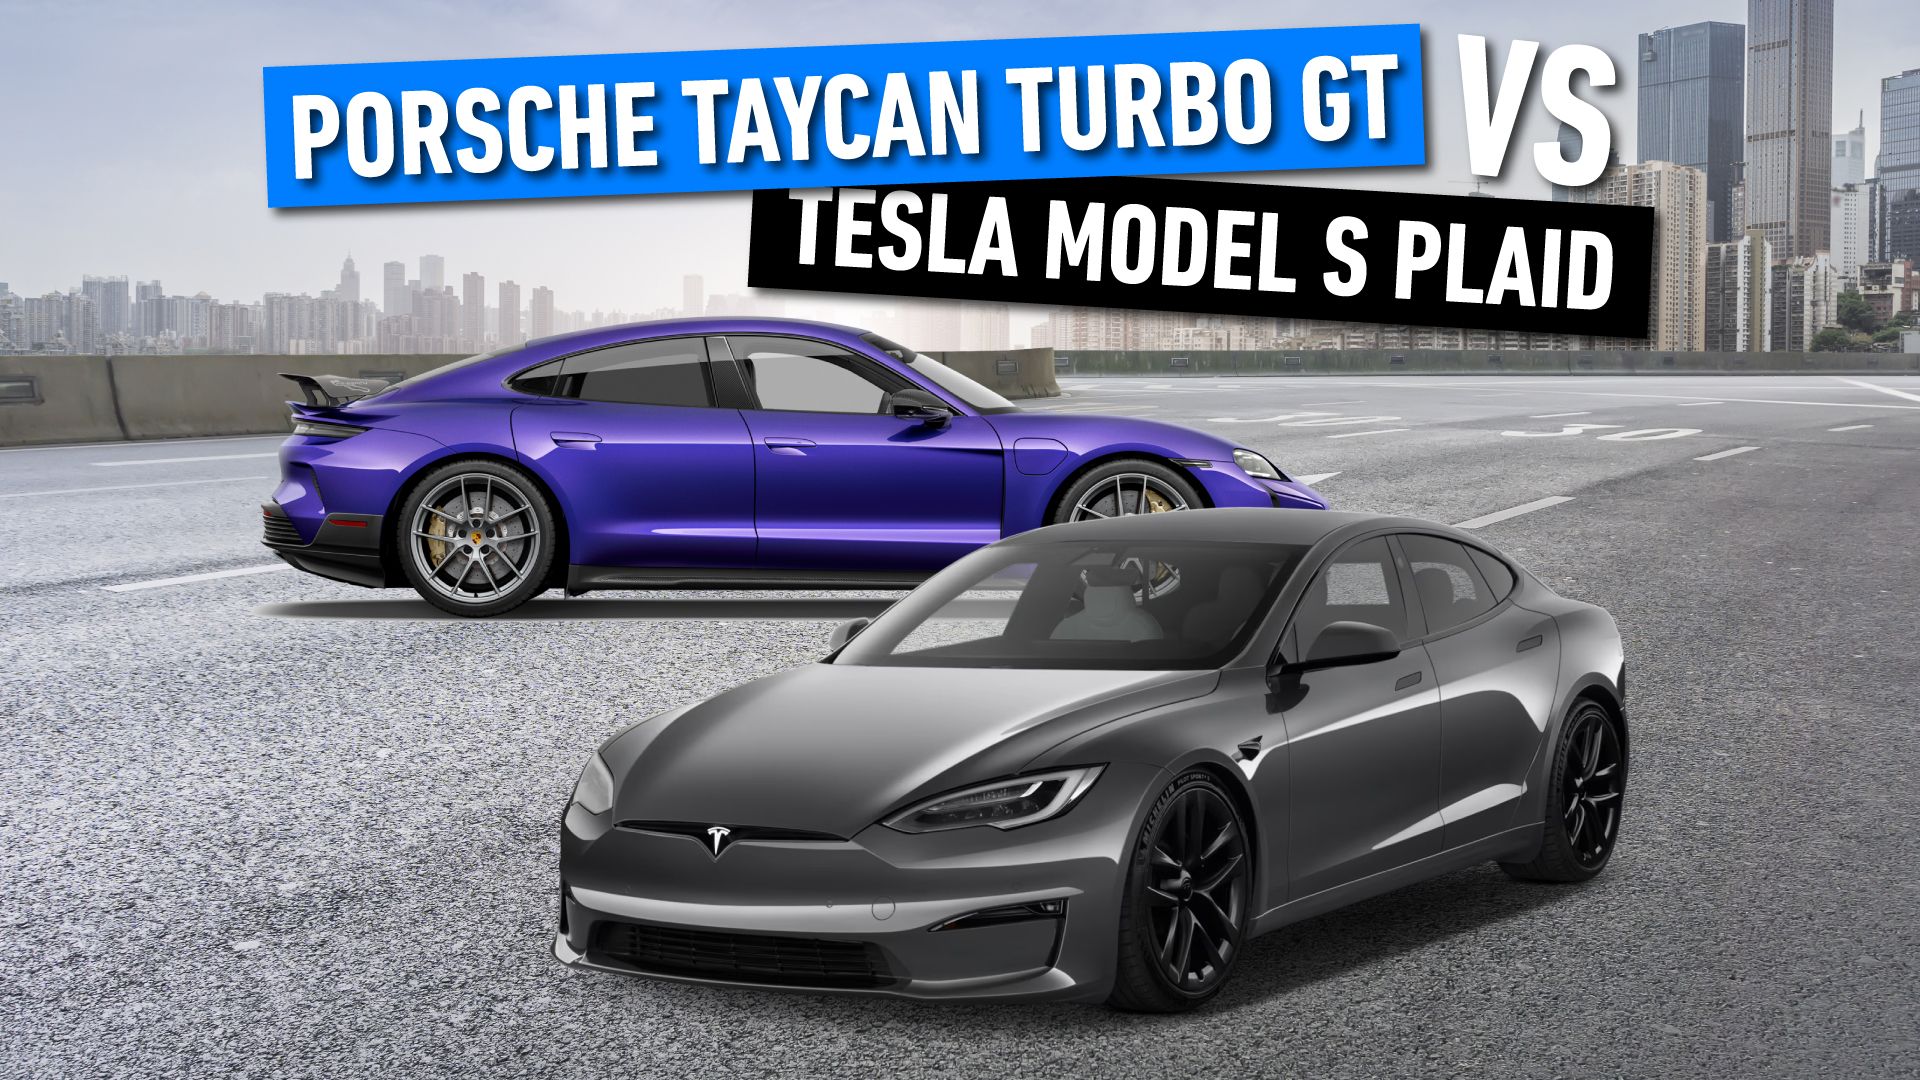 Porsche Taycan Turbo GT vs. Tesla Model S Plaid custom image